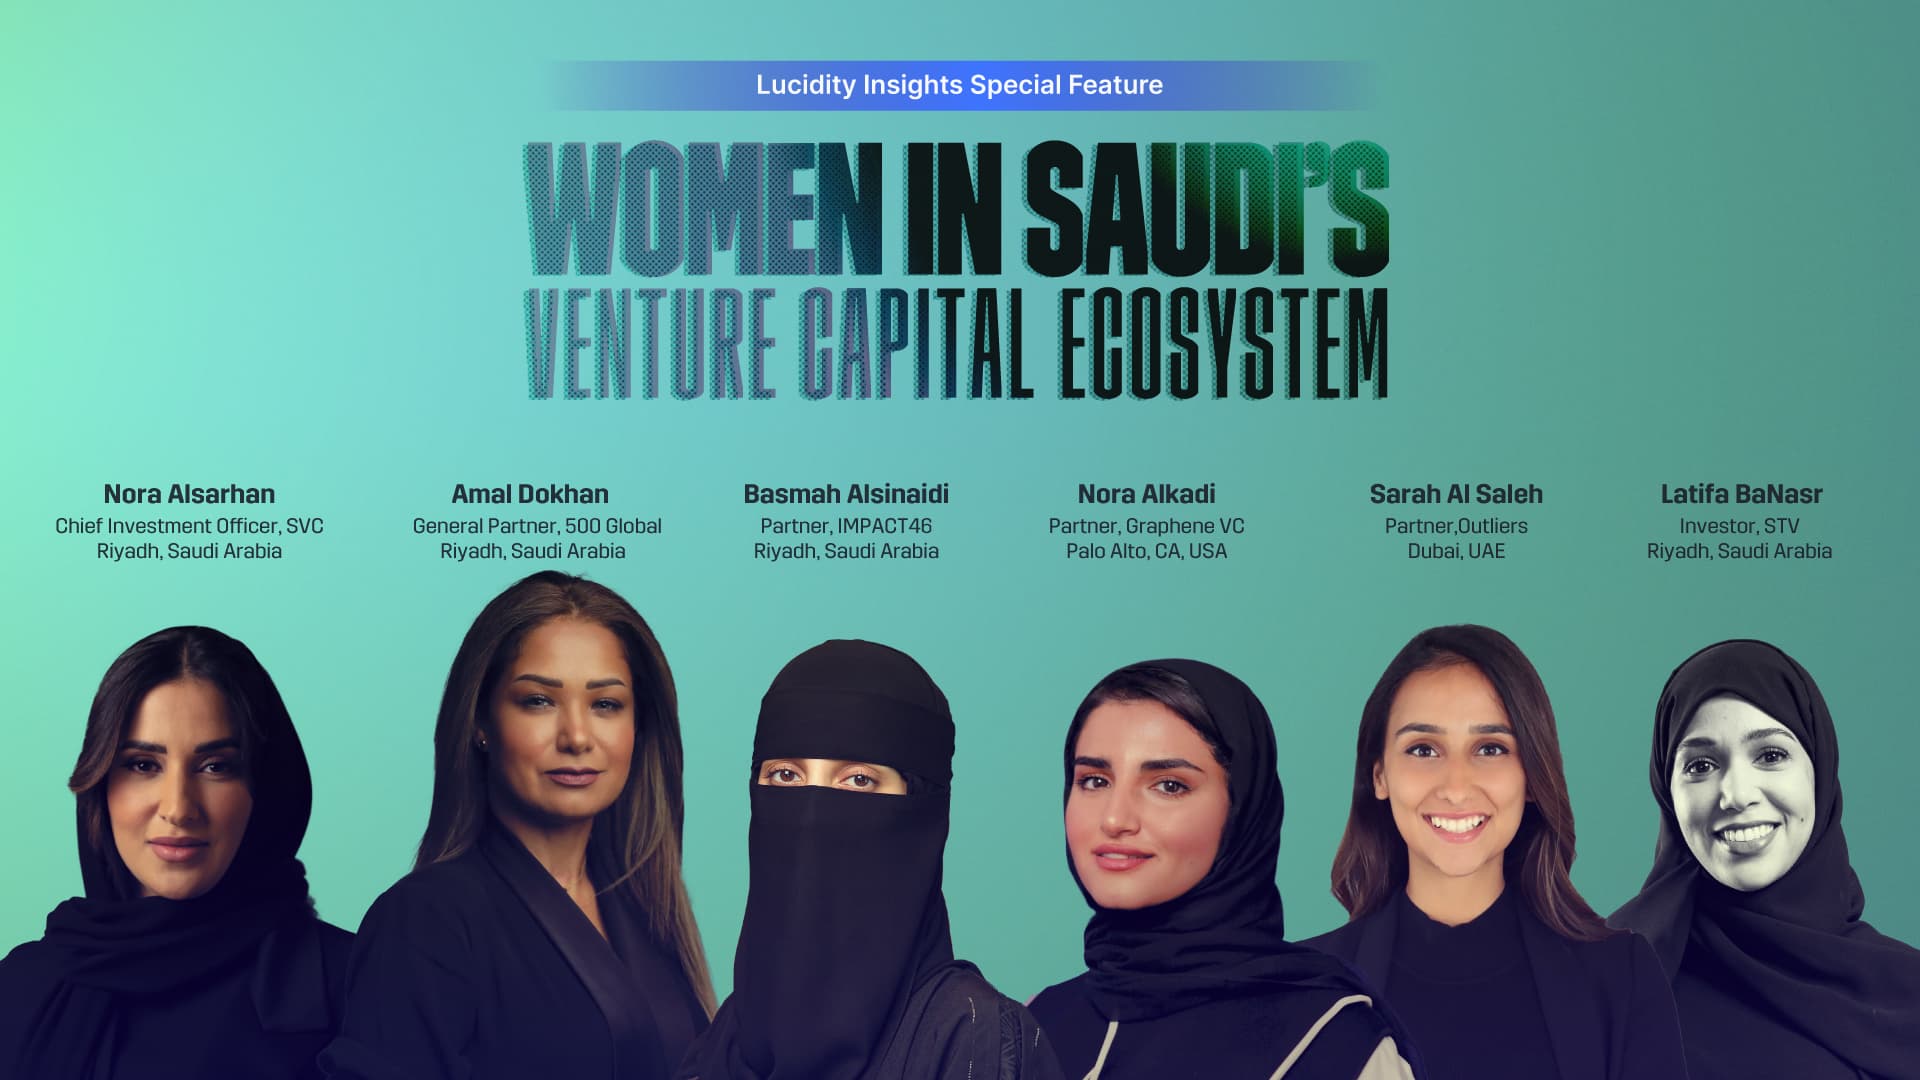 Saudi's Women in Venture Capital Ecosystem